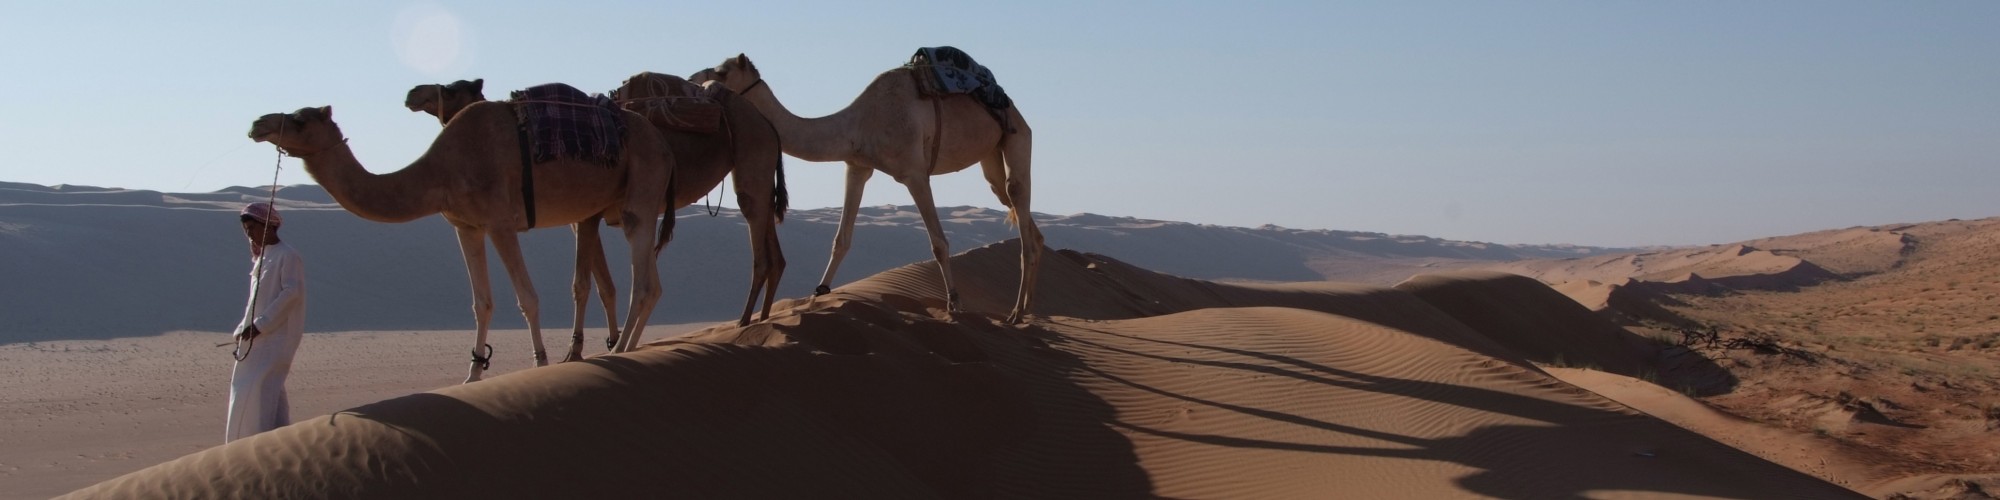 Desert Nights Camp - Al Wasil, Oman_Camel Safari